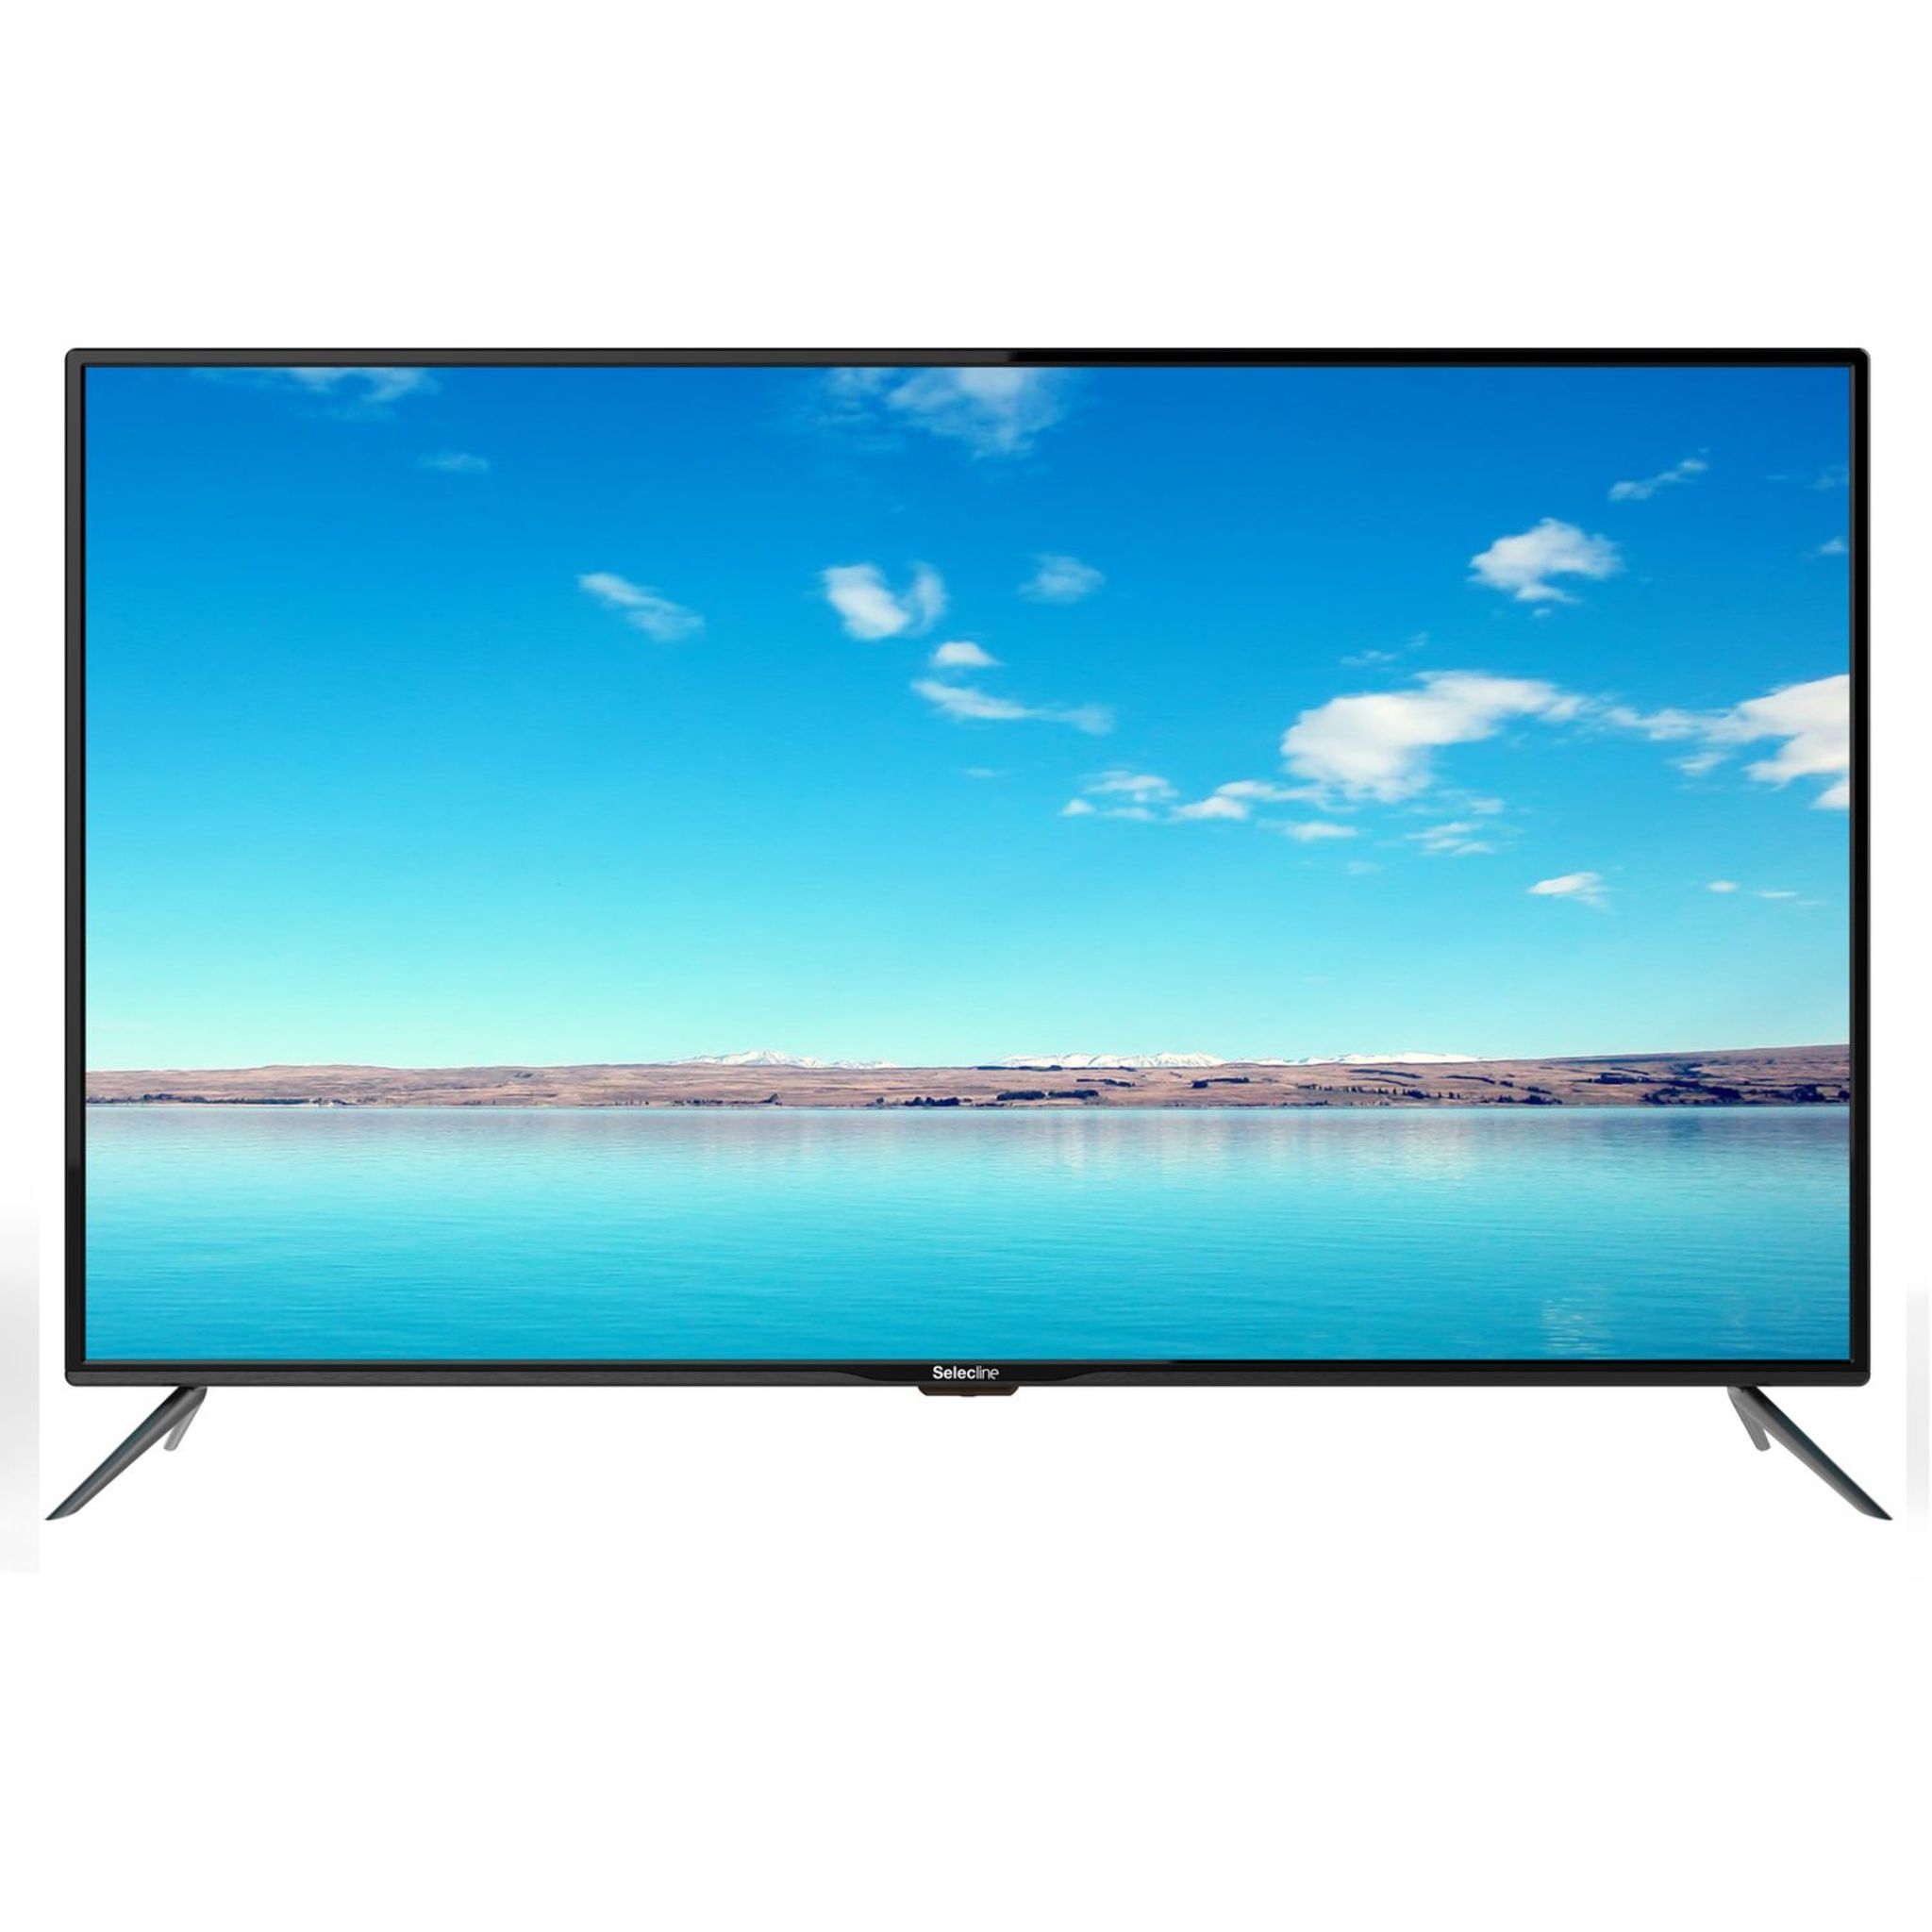 SELECLINE LE-2219D TV LED Full HD 54 cm pas cher 